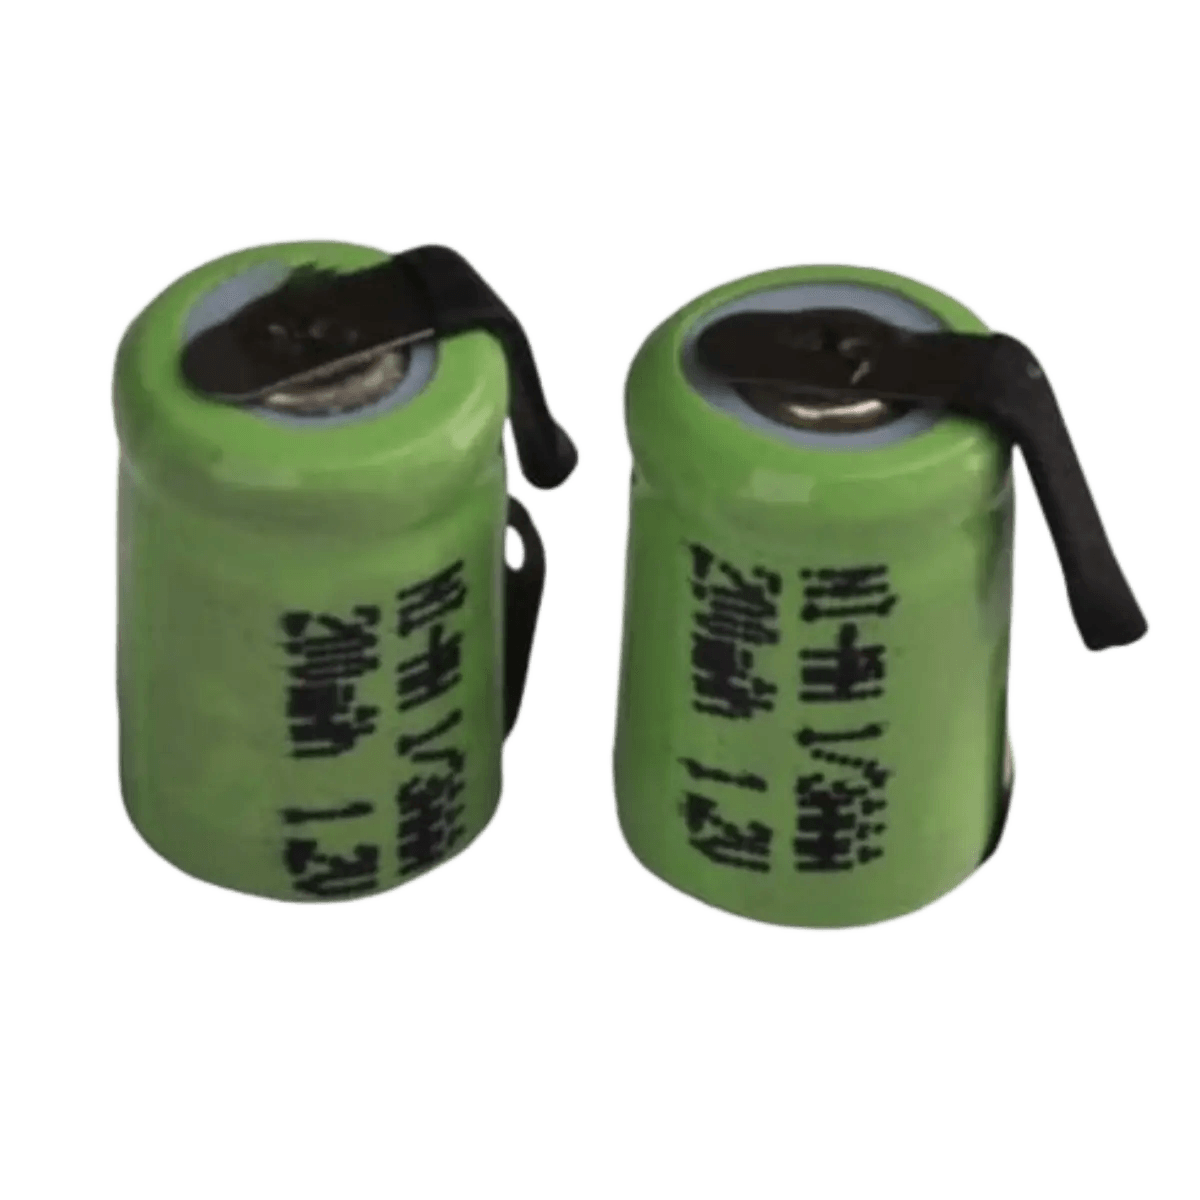 Energiezubehör - Batterie 1/3 Aaa 1,2 V Nimh 200 mAh